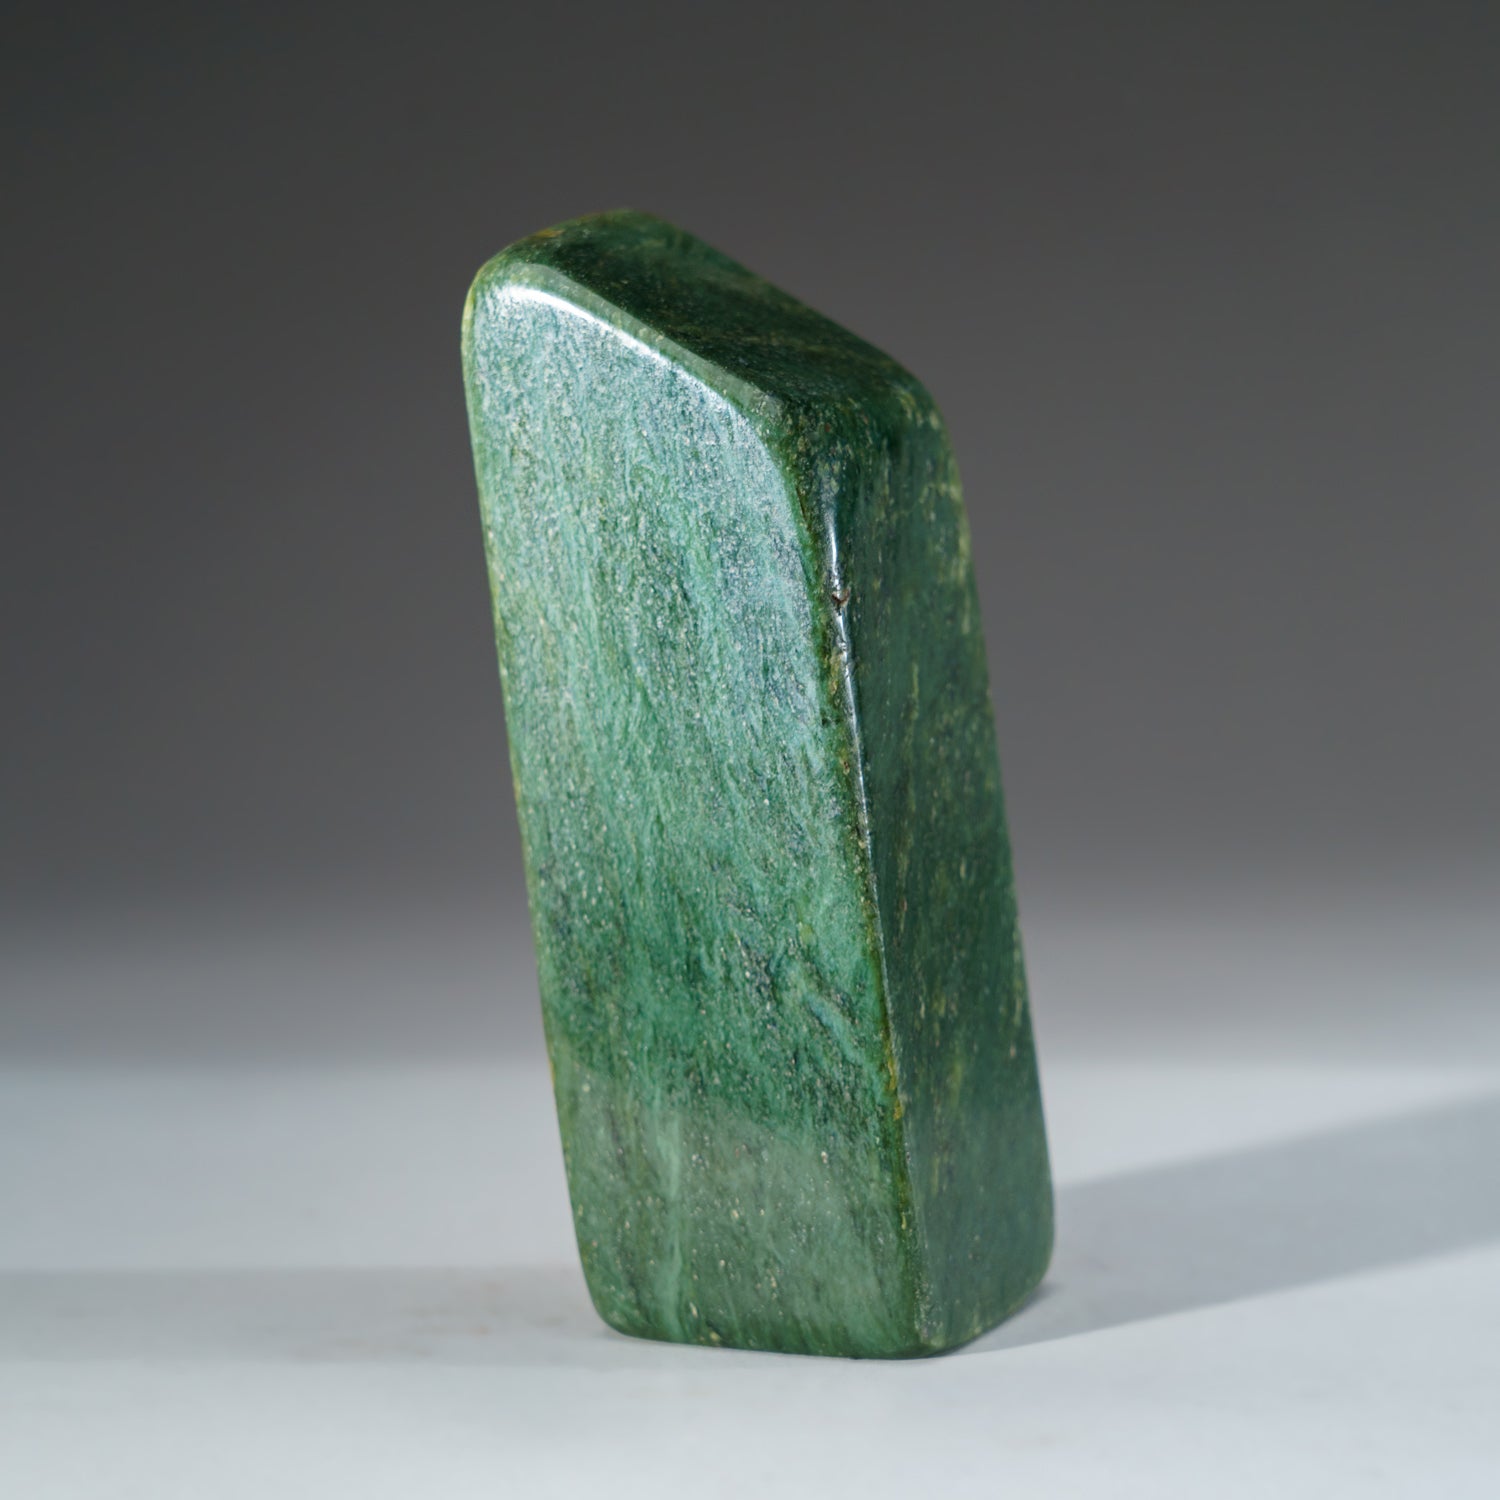 Polished Nephrite Jade Freeform from Pakistan (1.5 lbs)